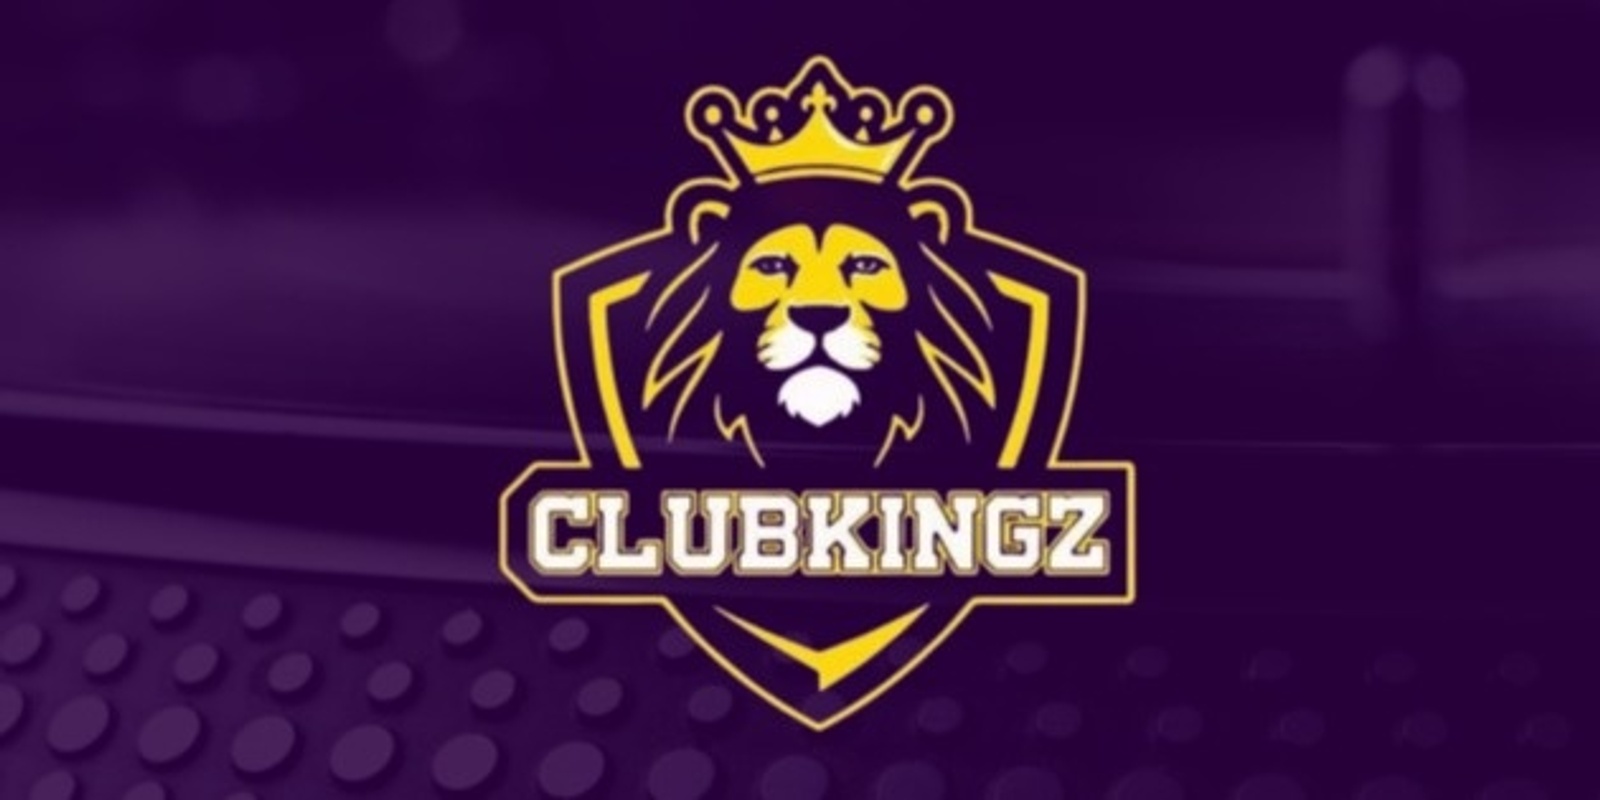 Clubkingz's banner